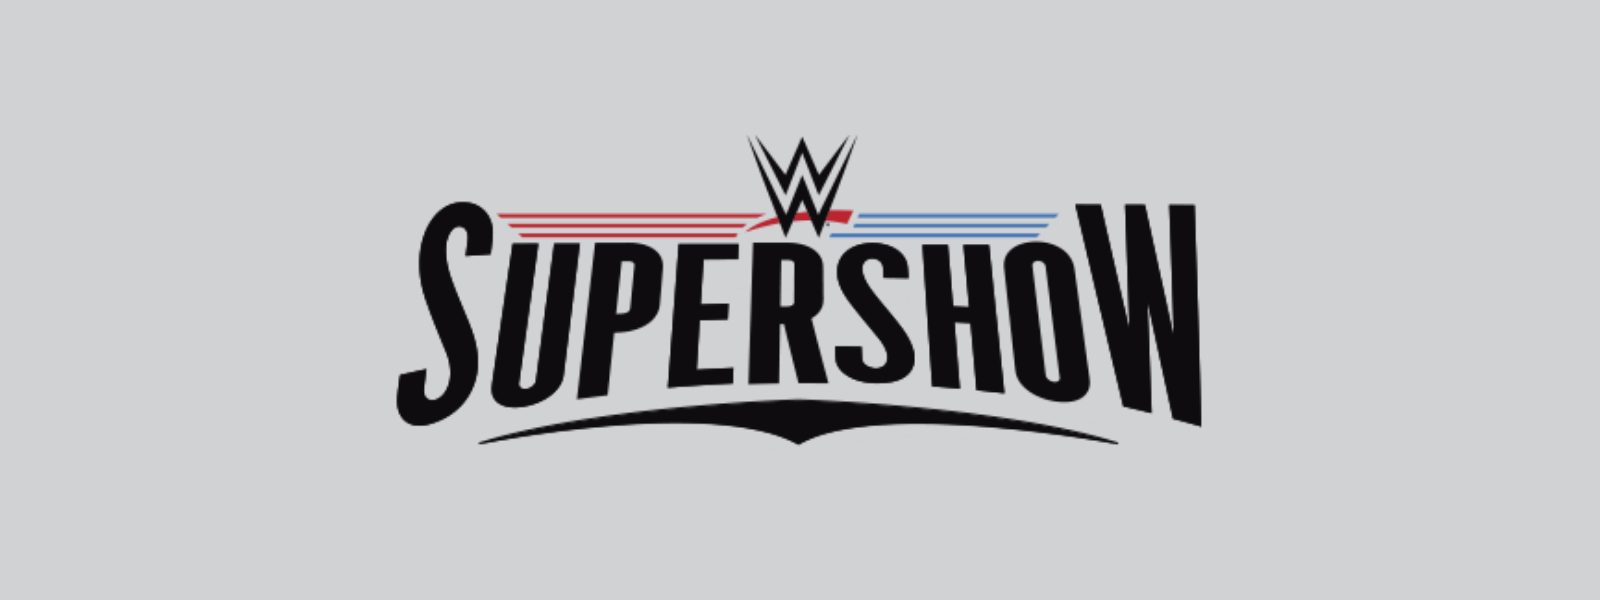 WWE Supershow    